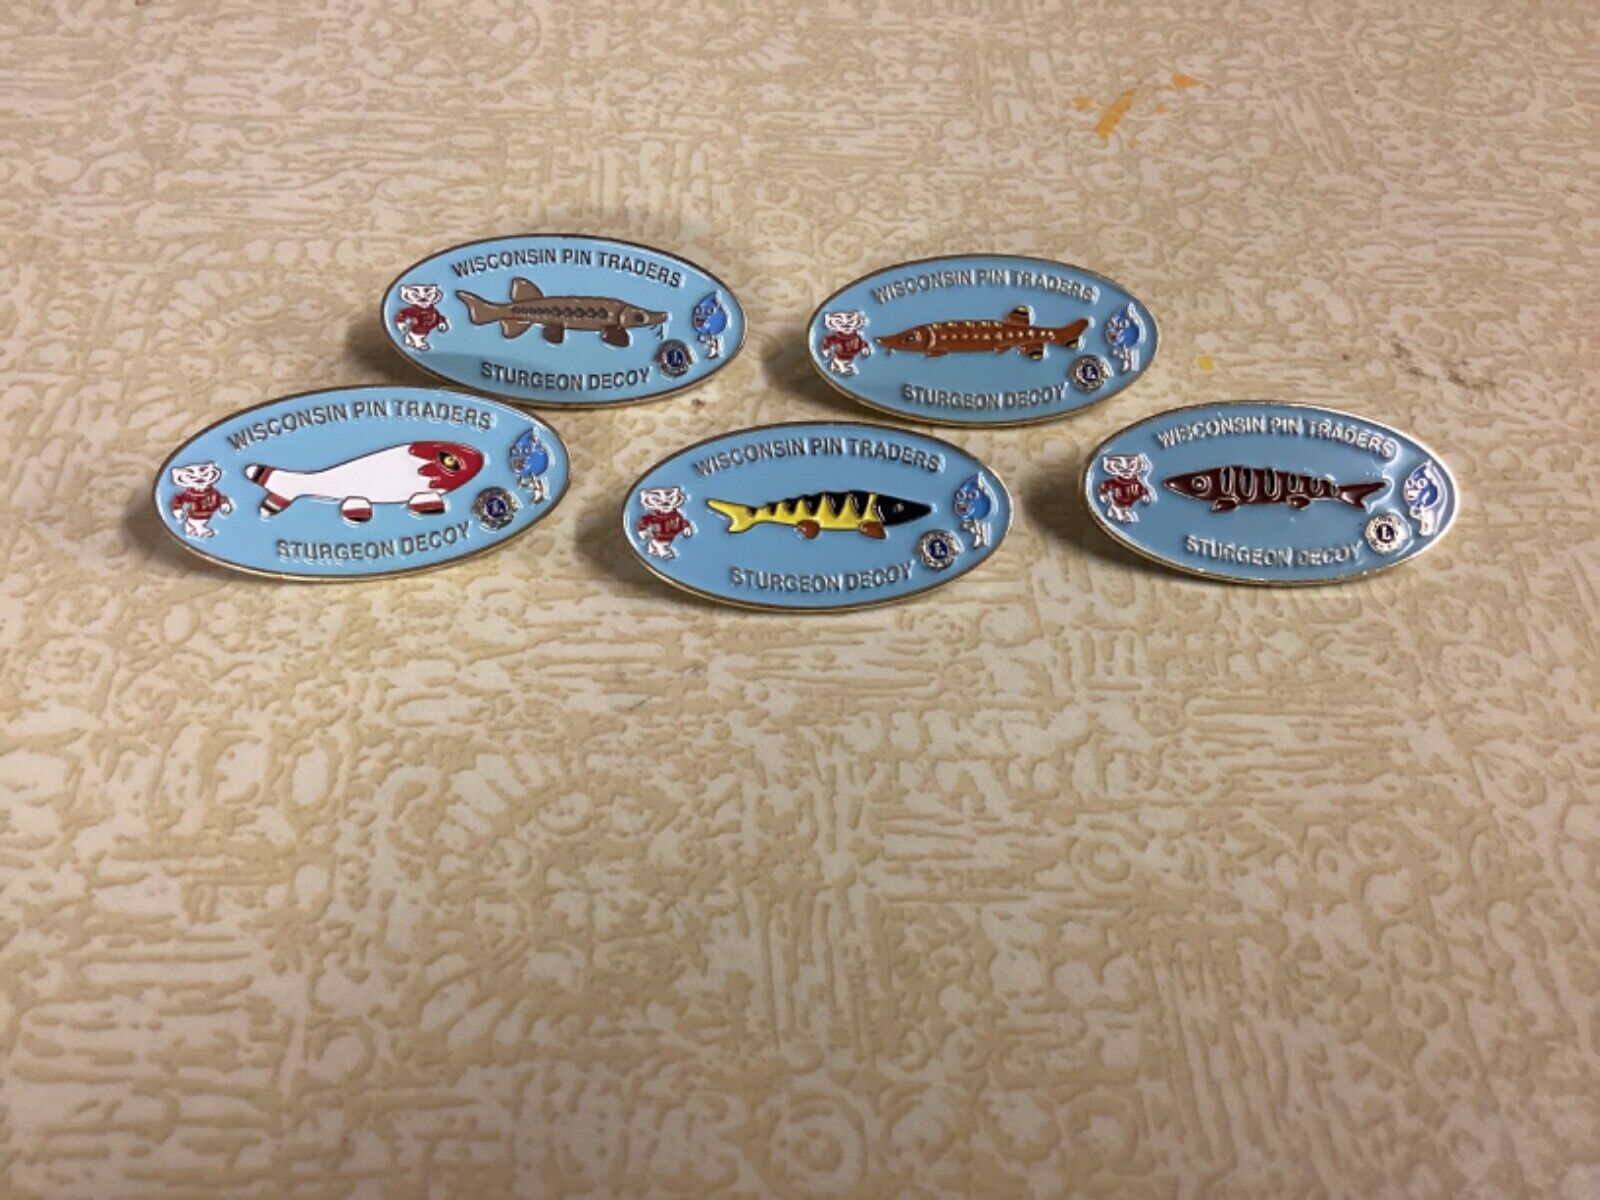 Lions Club Pin: 5 Wisconsin Pin Traders Sturgeon Decoy Pins